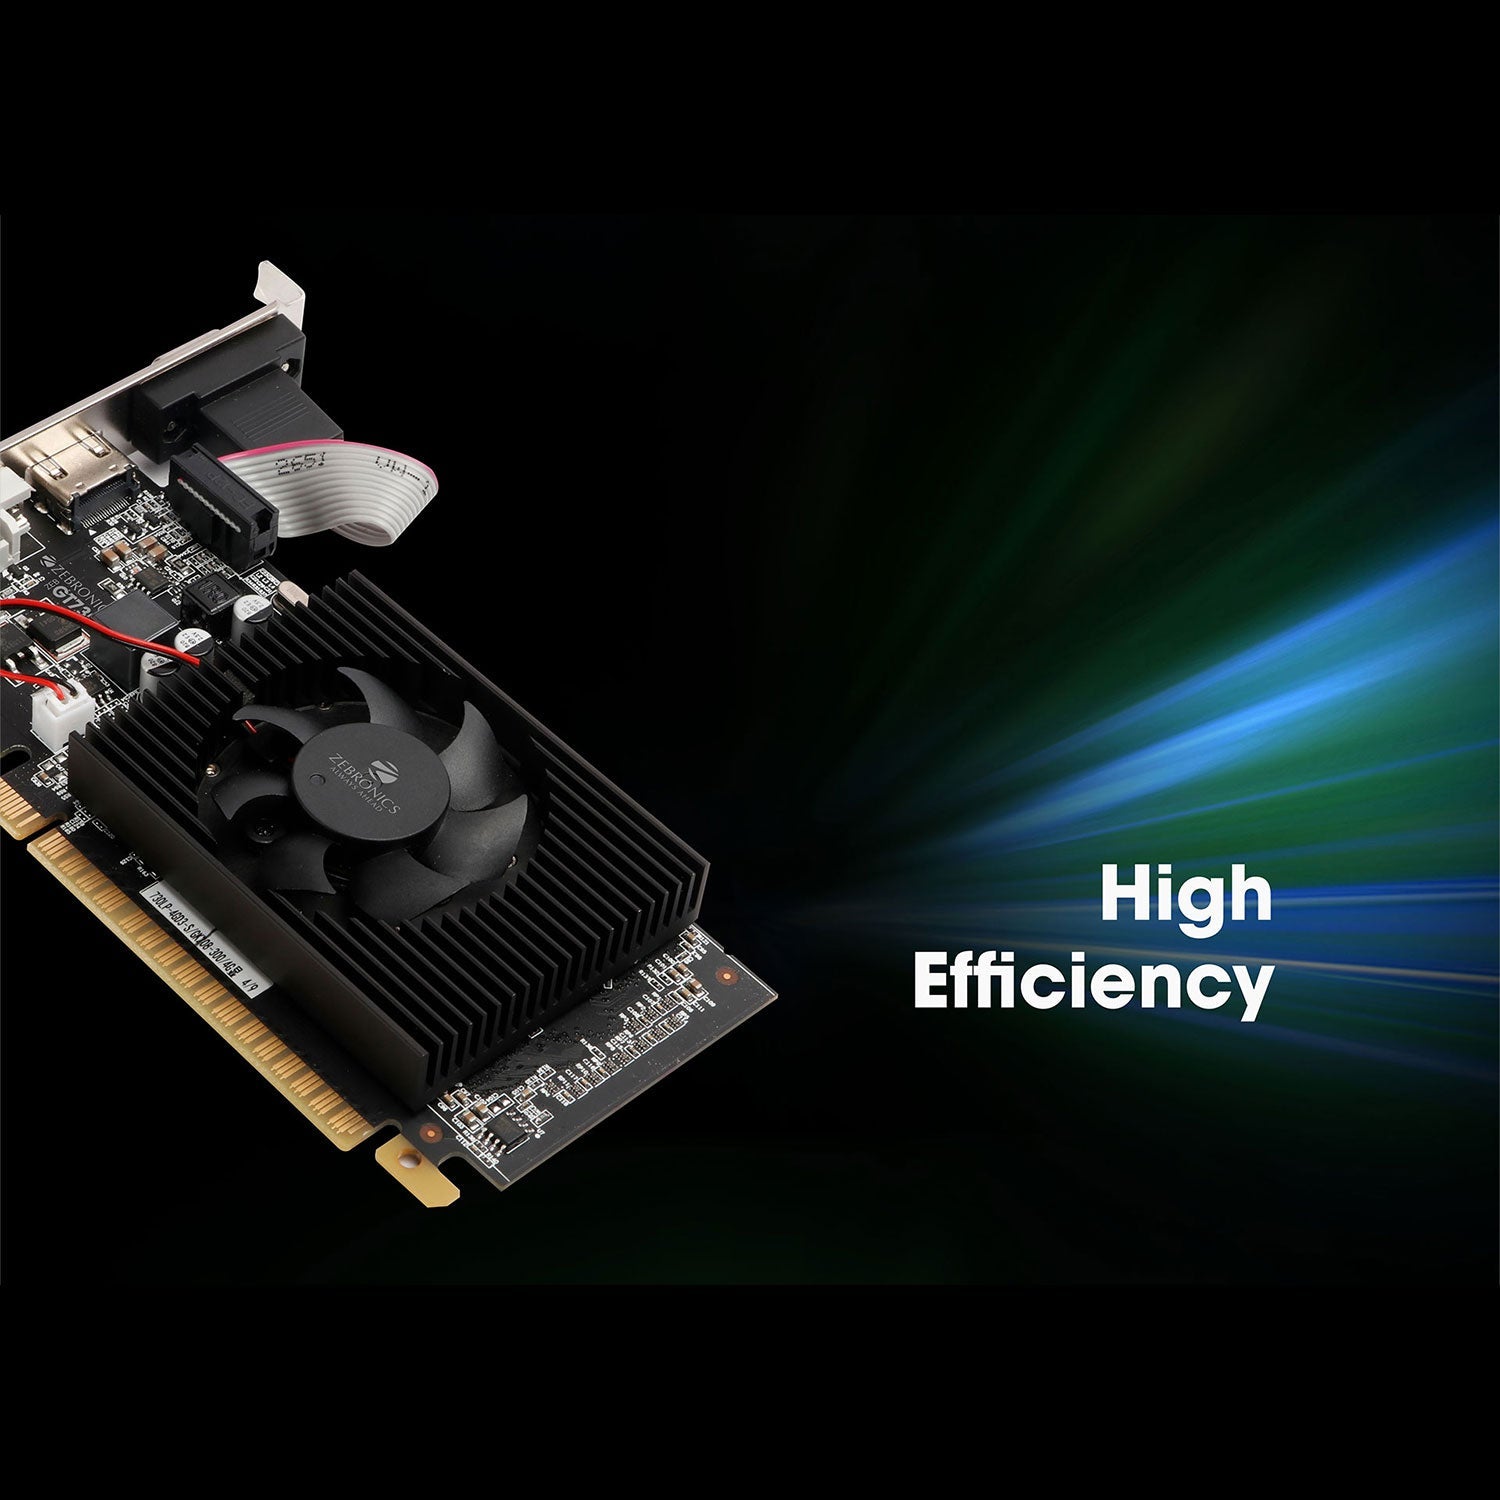 NEW Gaming Nvidia Geforce GT 730 4GB Low profile Graphics card VGA,HDMI&DVI  US